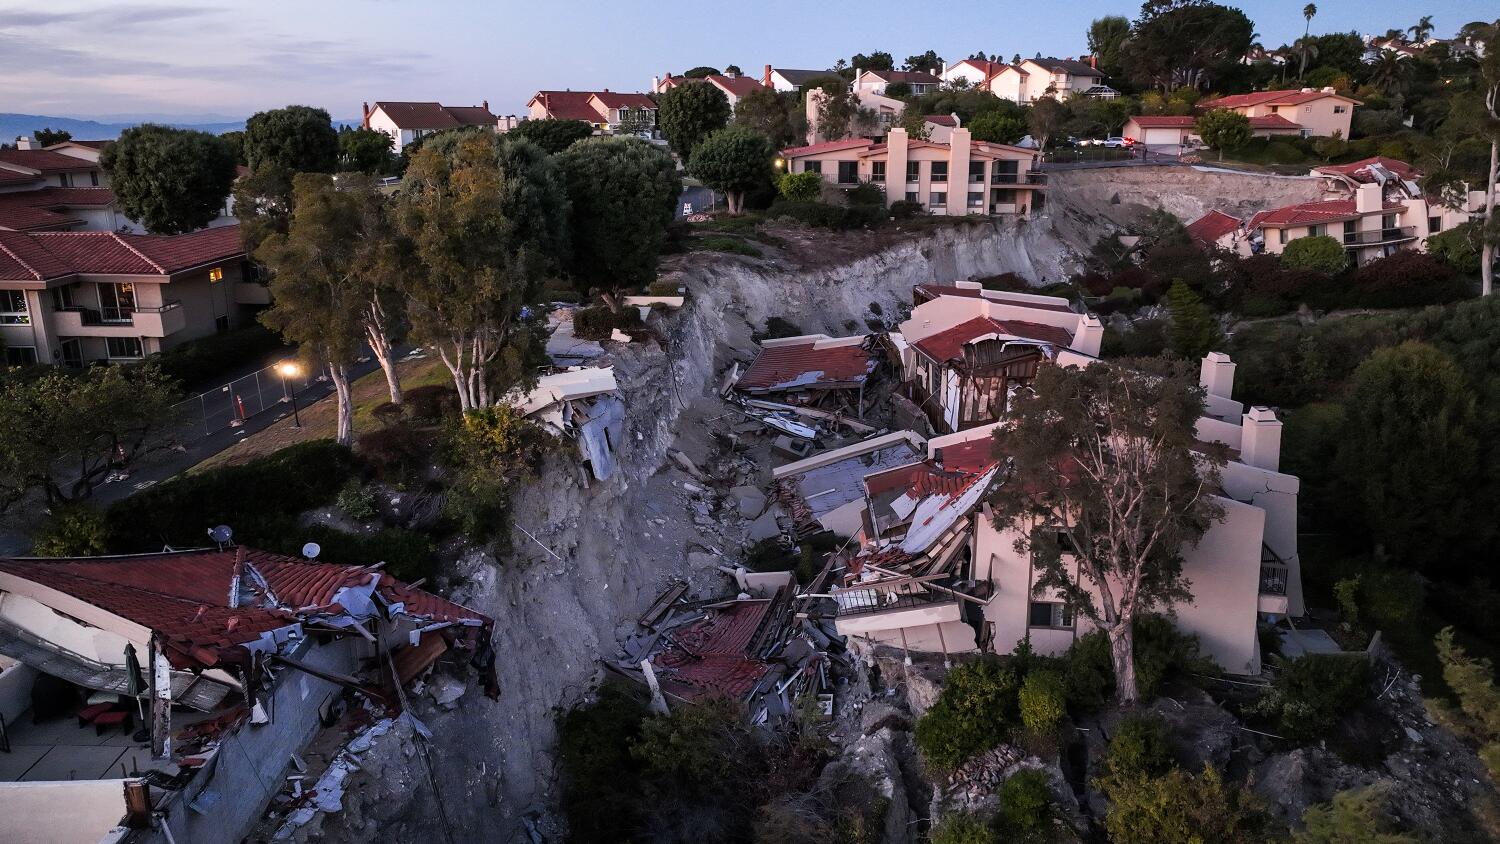 The devastating Rolling Hills Estates landslide last July was a shock. Researchers say it could have been predicted